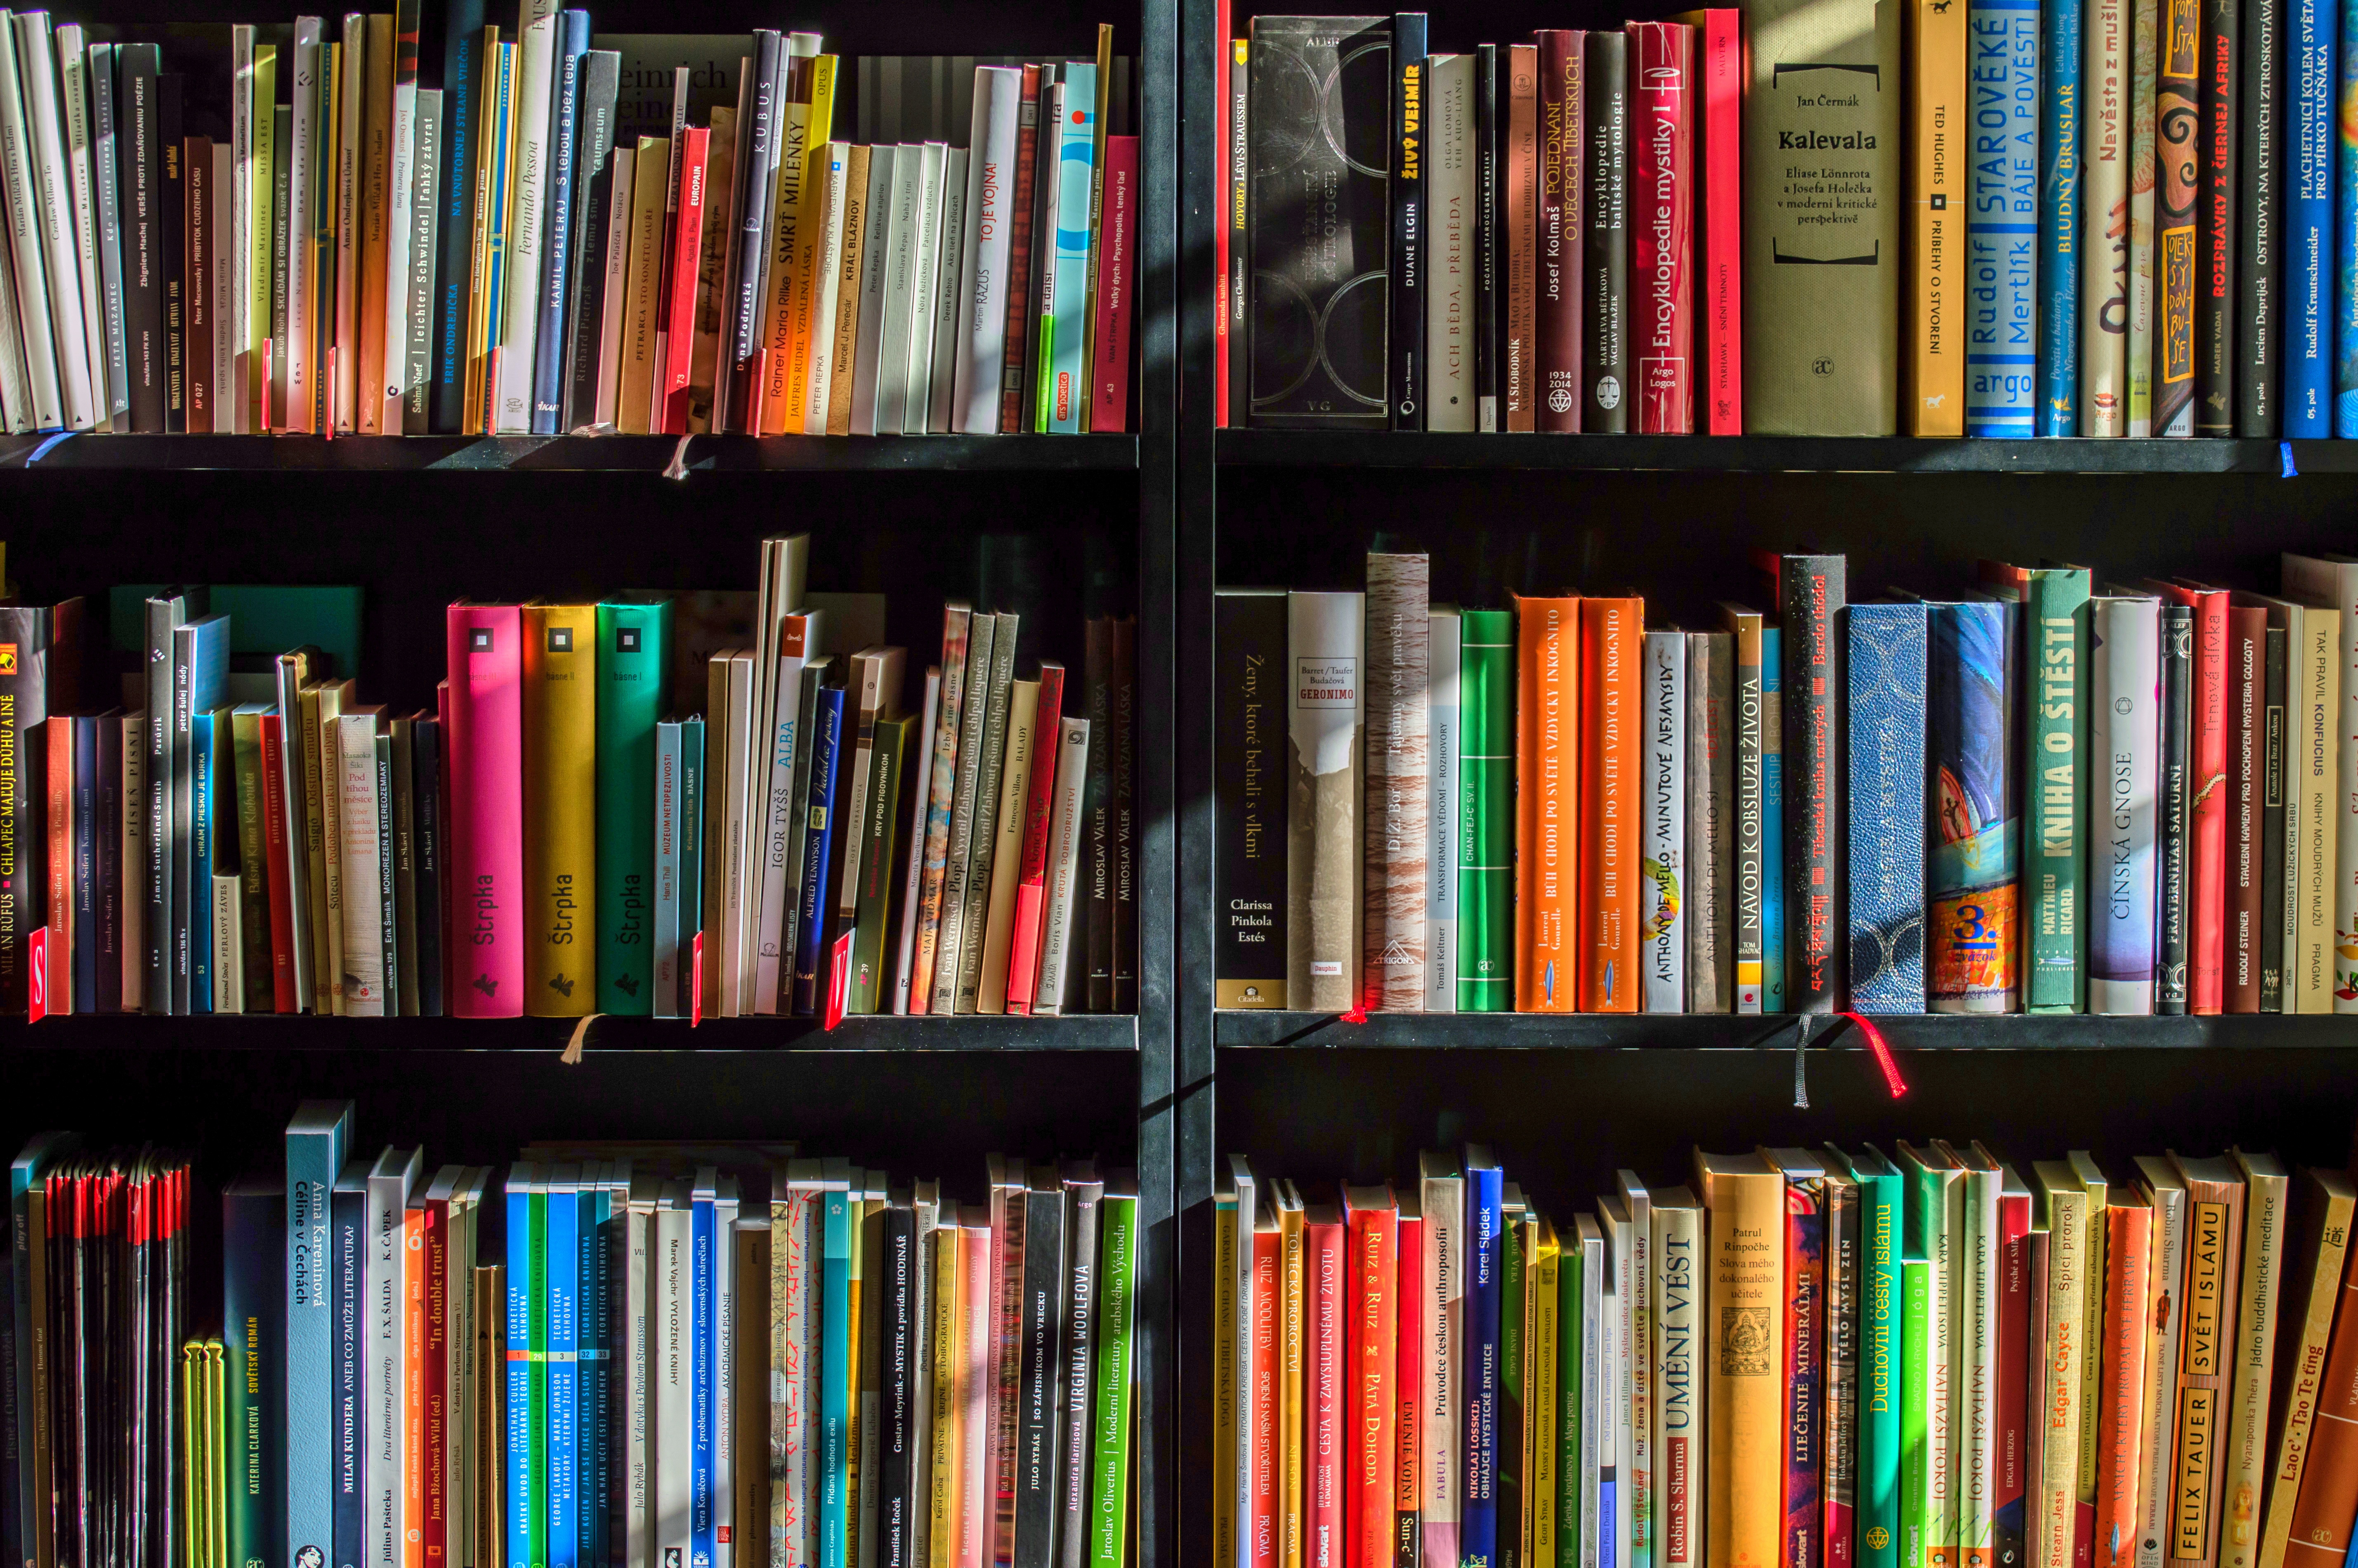 Colorful shelf of many books.